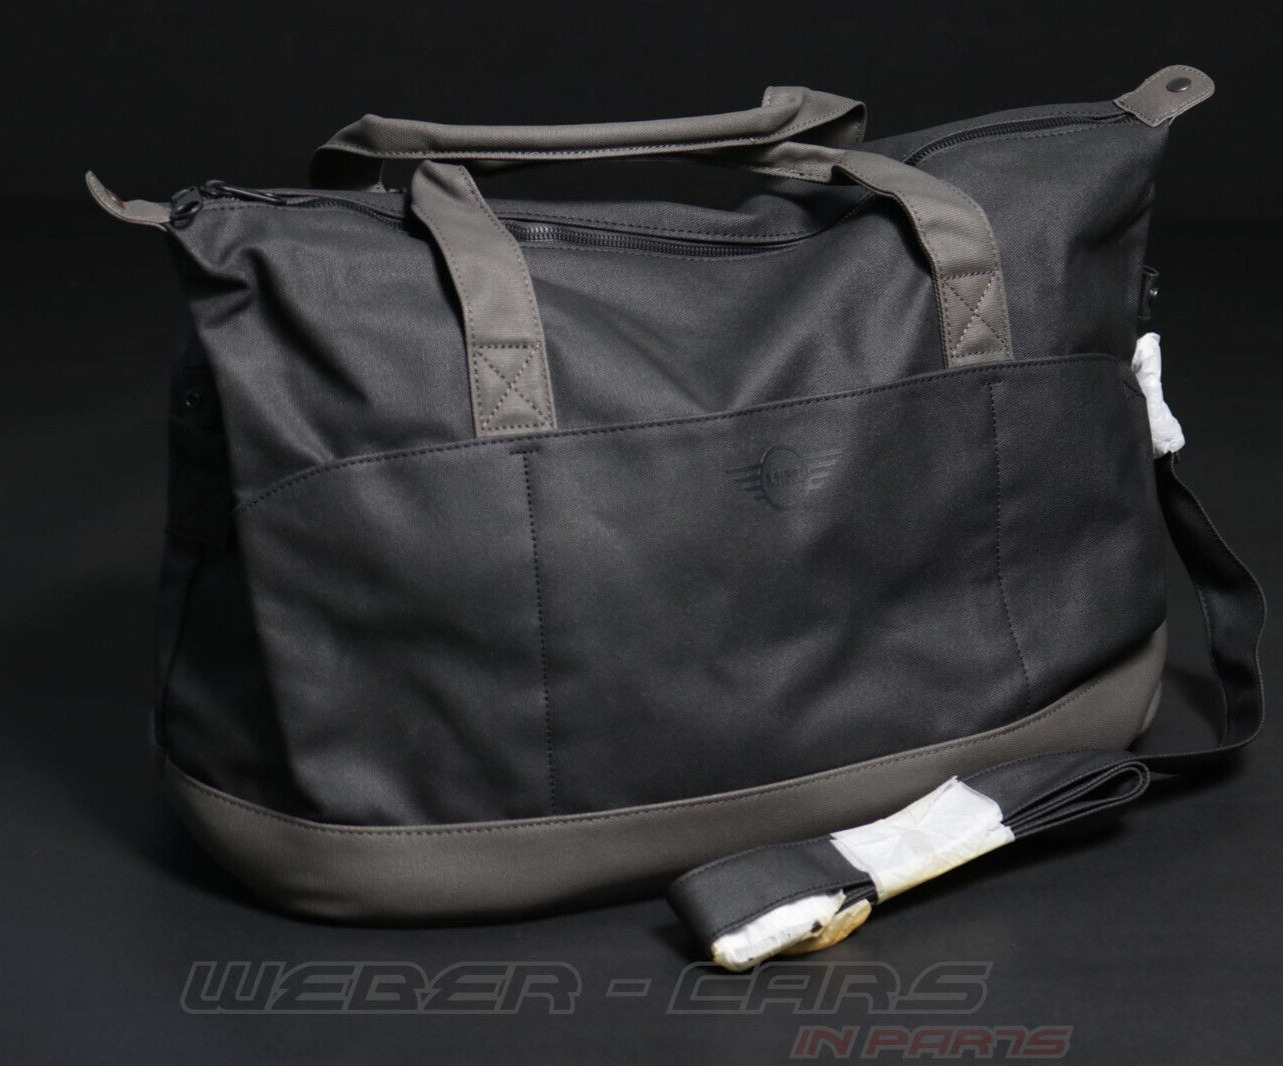 2451022 New OEM BMW MINI Weekend Travel Bag Canvas Mix Black Grey